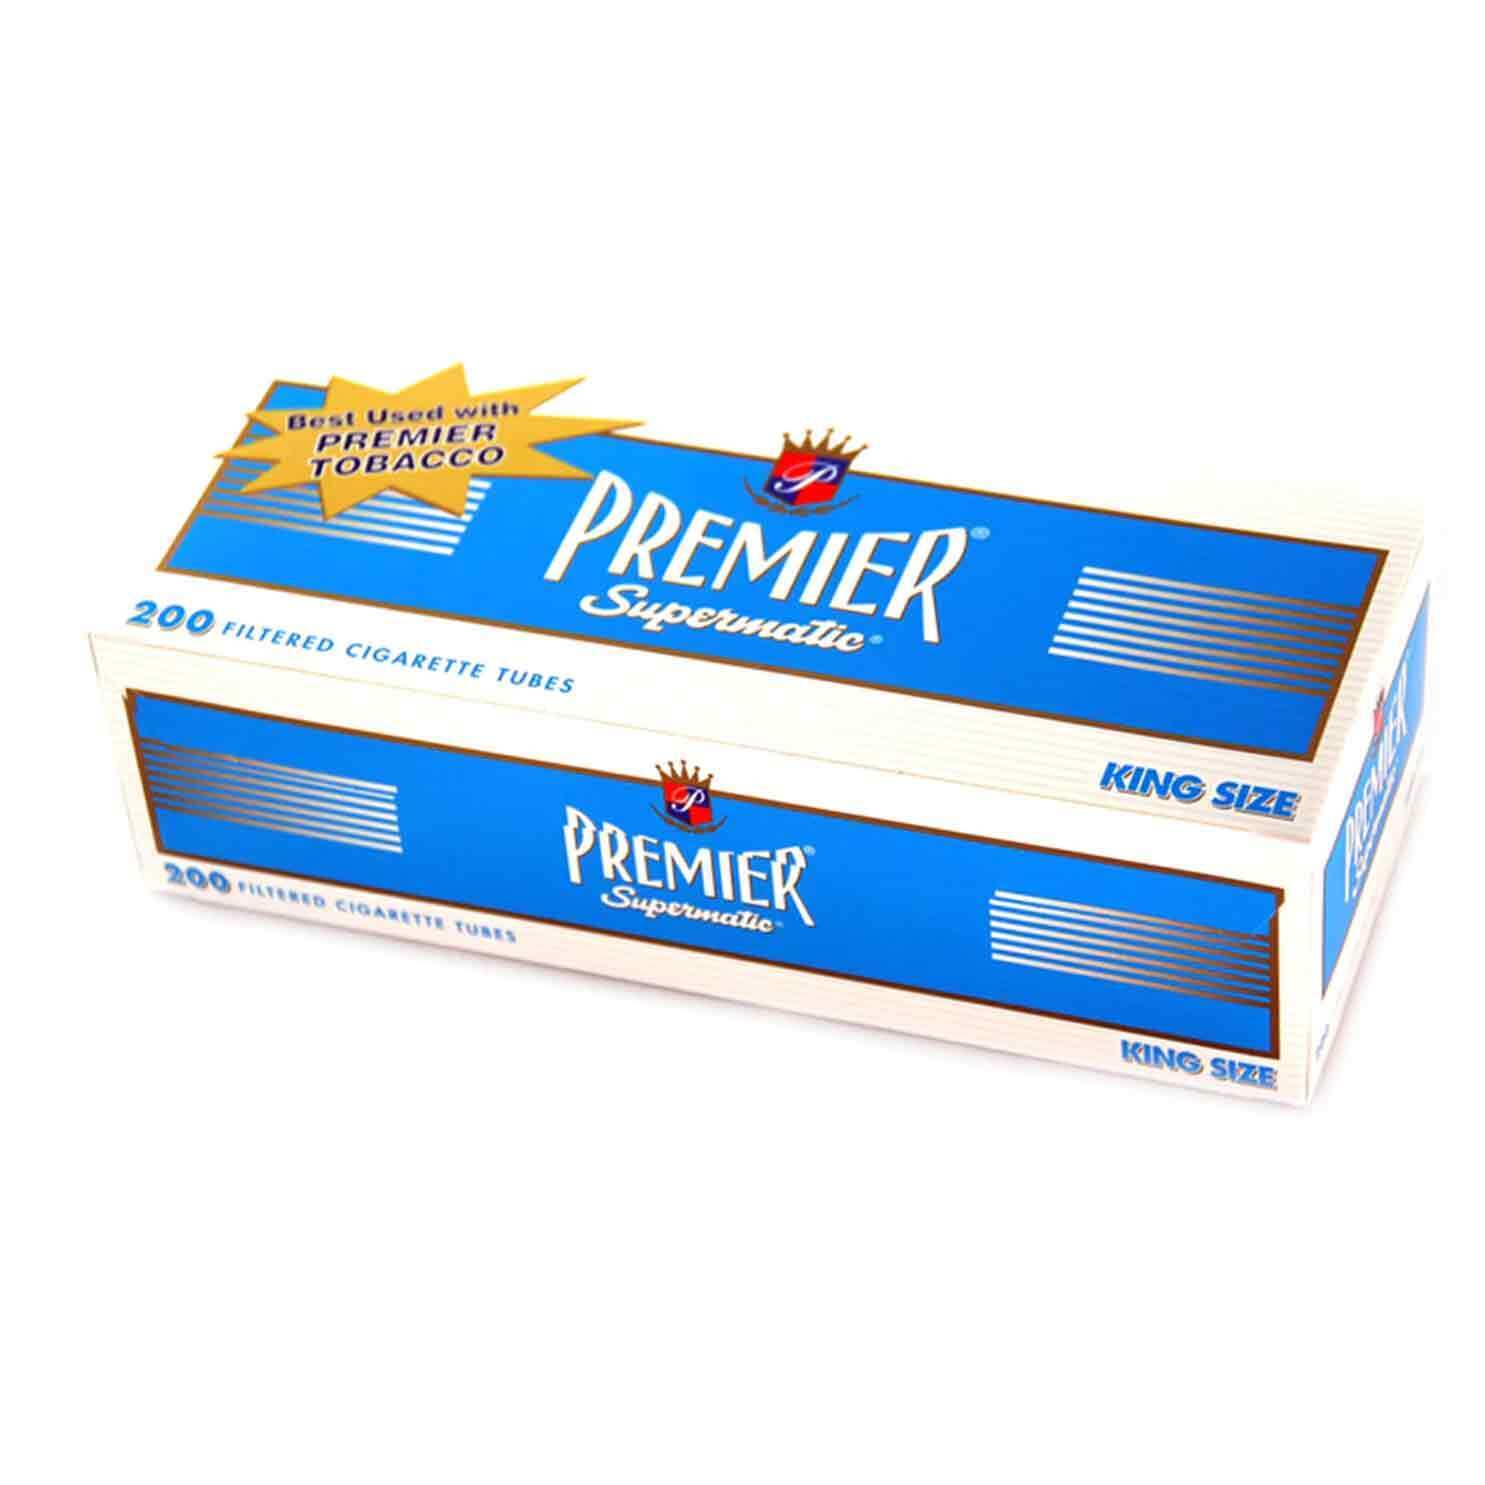 PREMIER Blue (Light) Cigarette Tubes - King Size Filter Tubes (1 Box of 200)